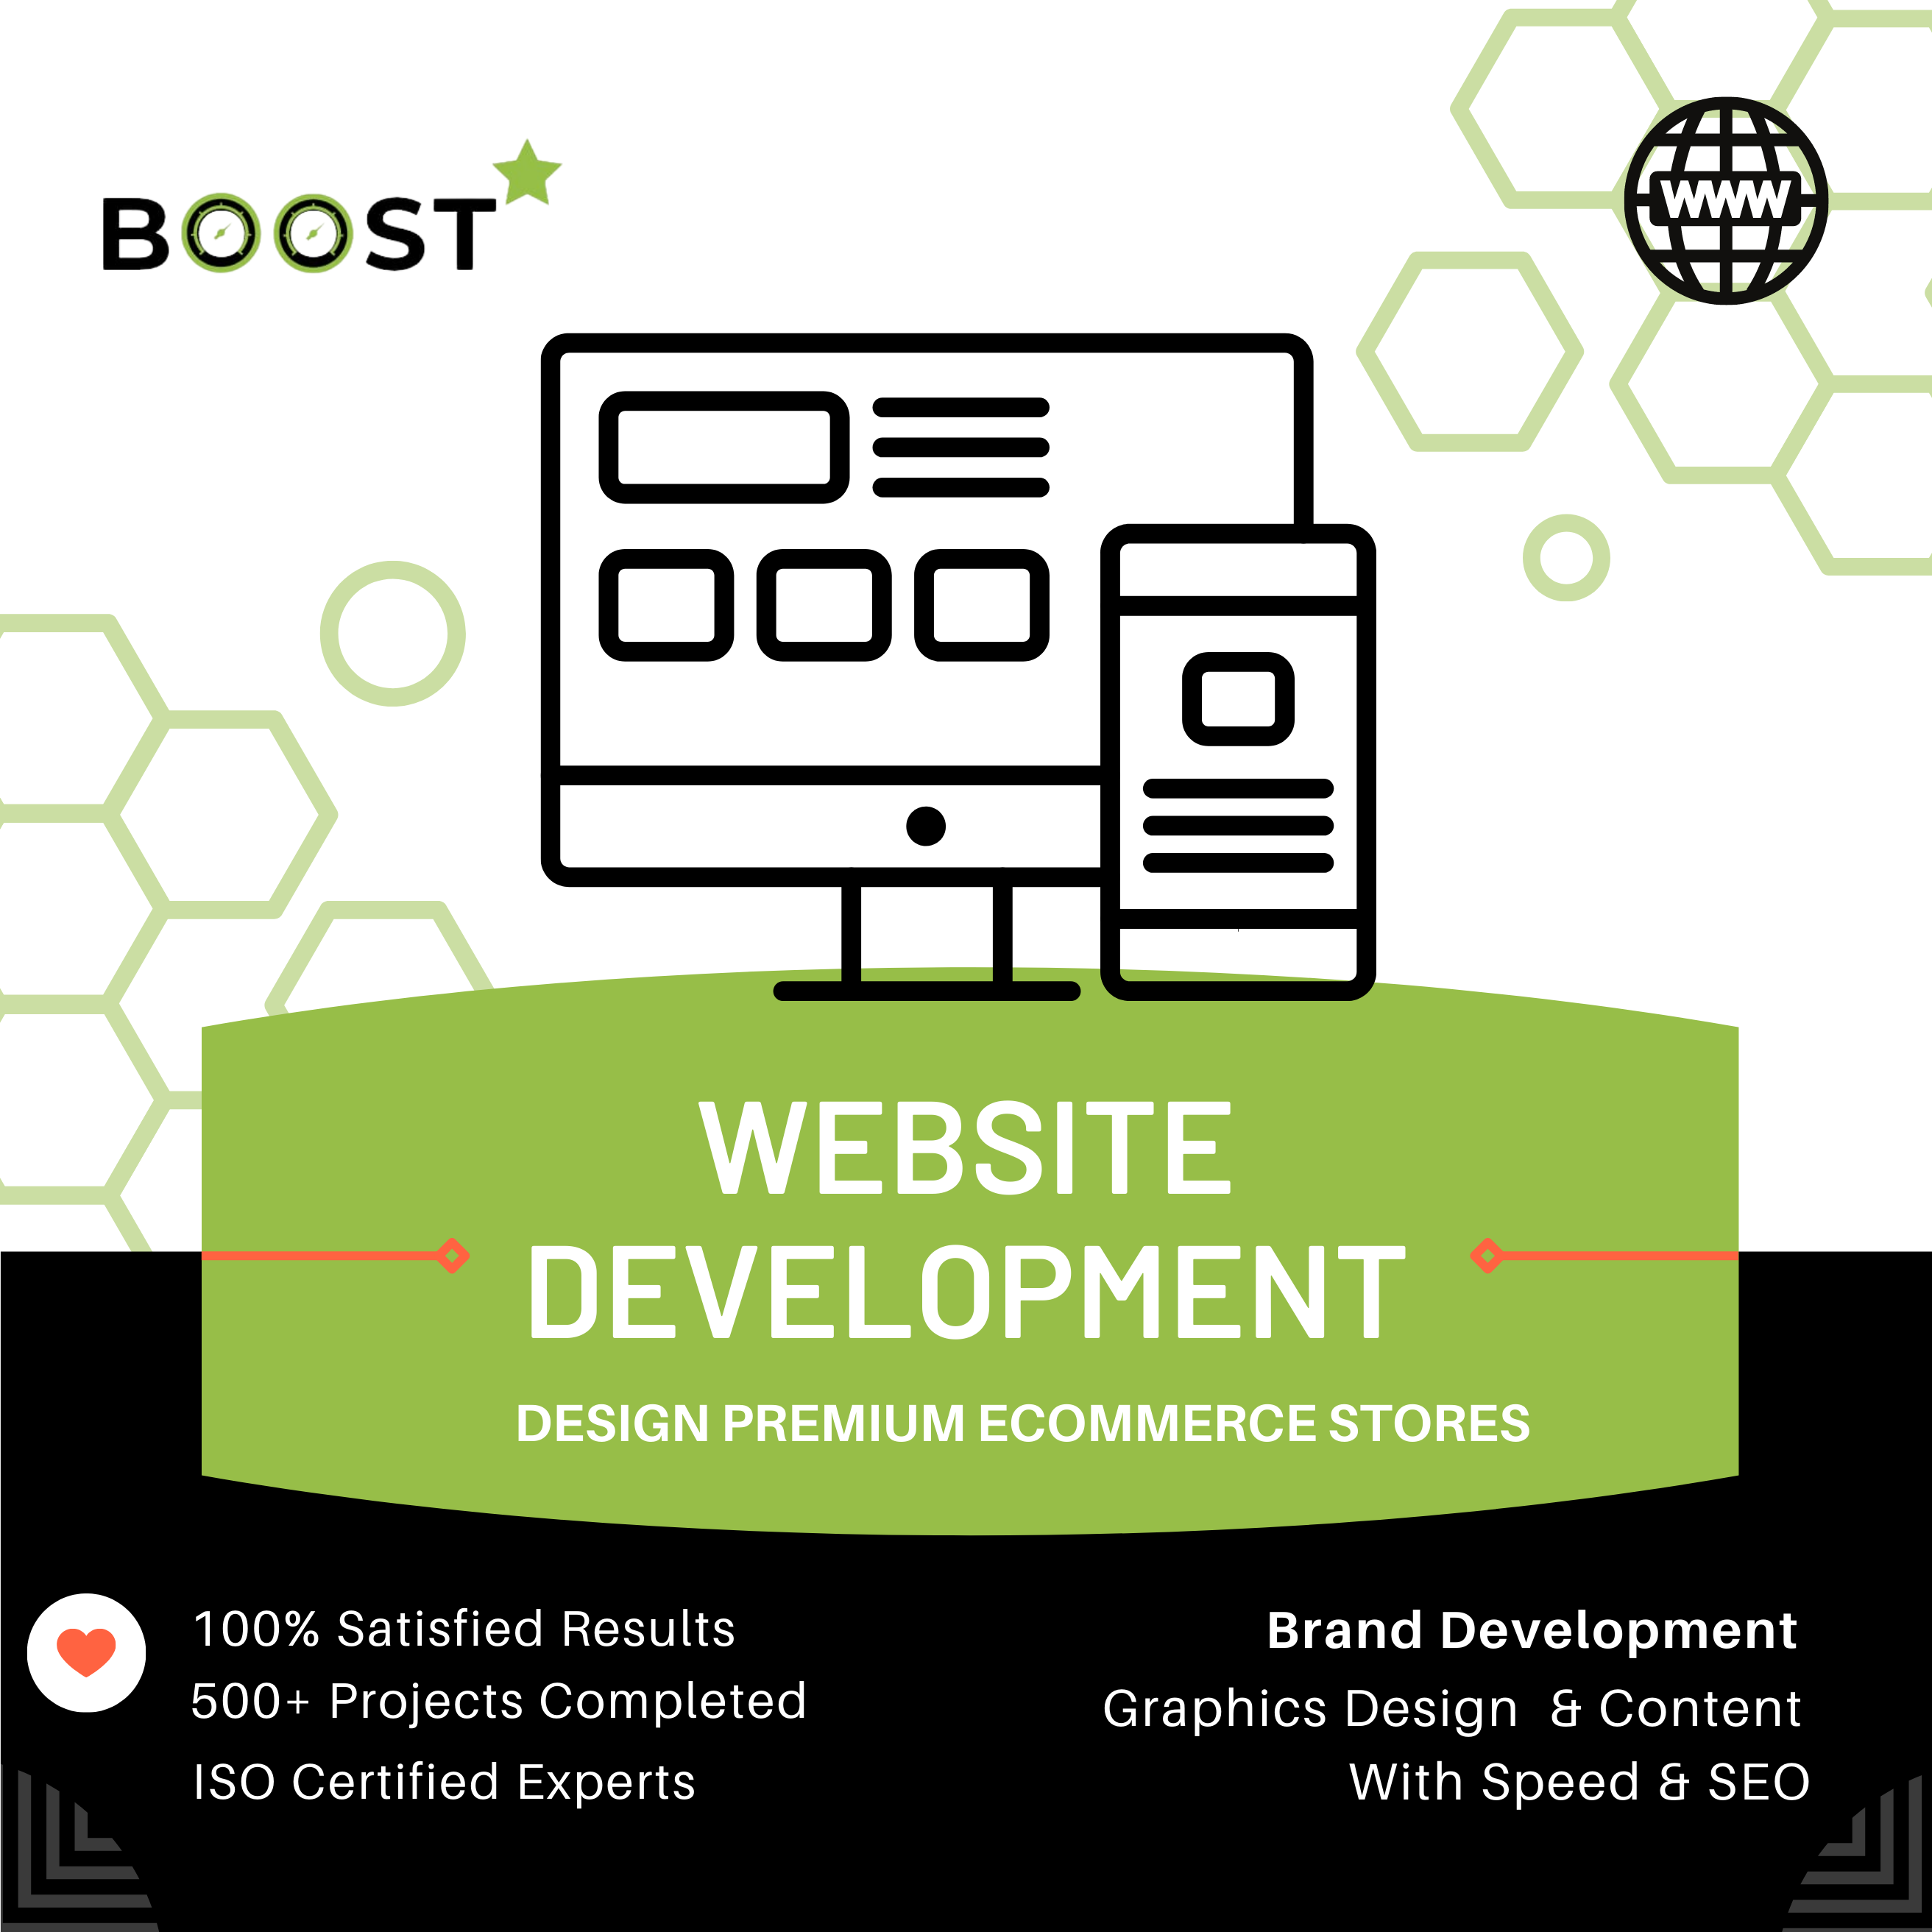 Website Development Design Shopify Boost star experts